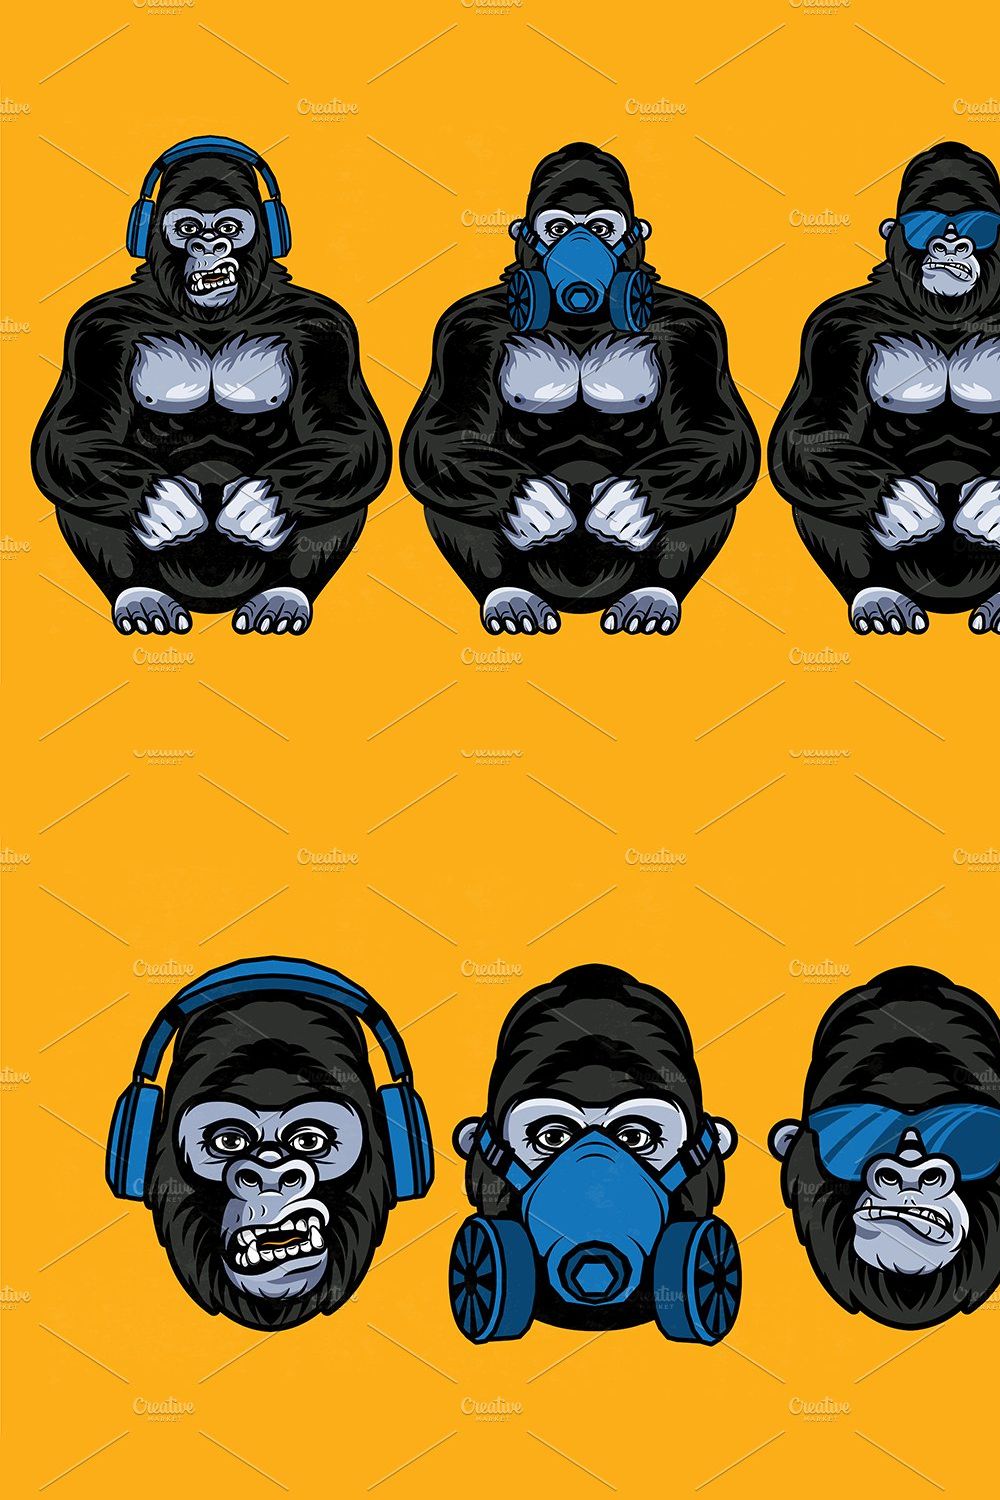 Three wise gorillas. pinterest preview image.